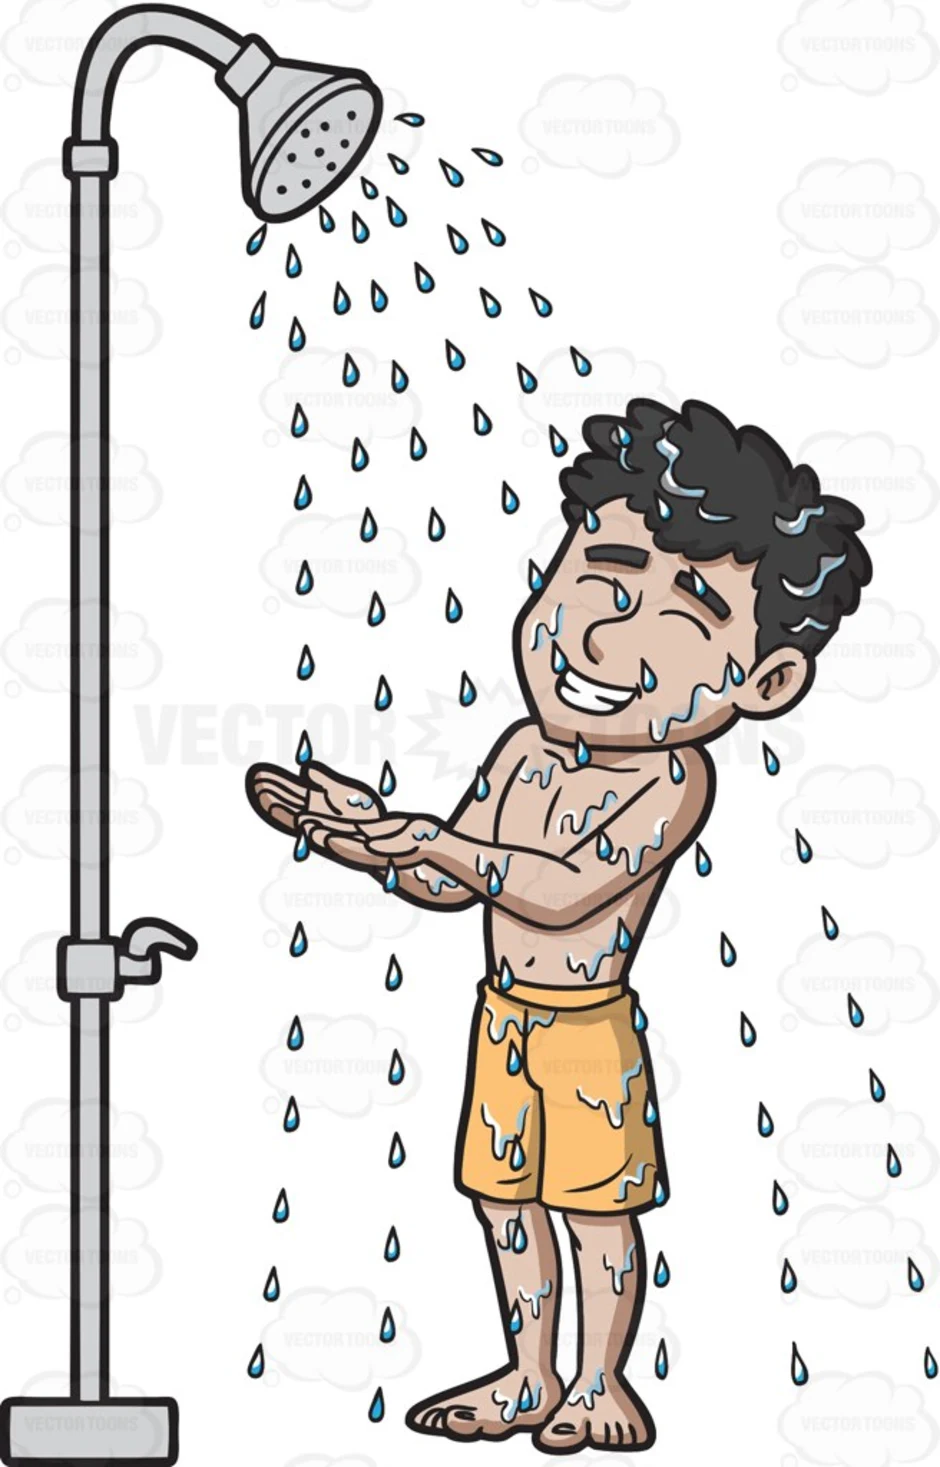 Have s shower. Человечек под душем.